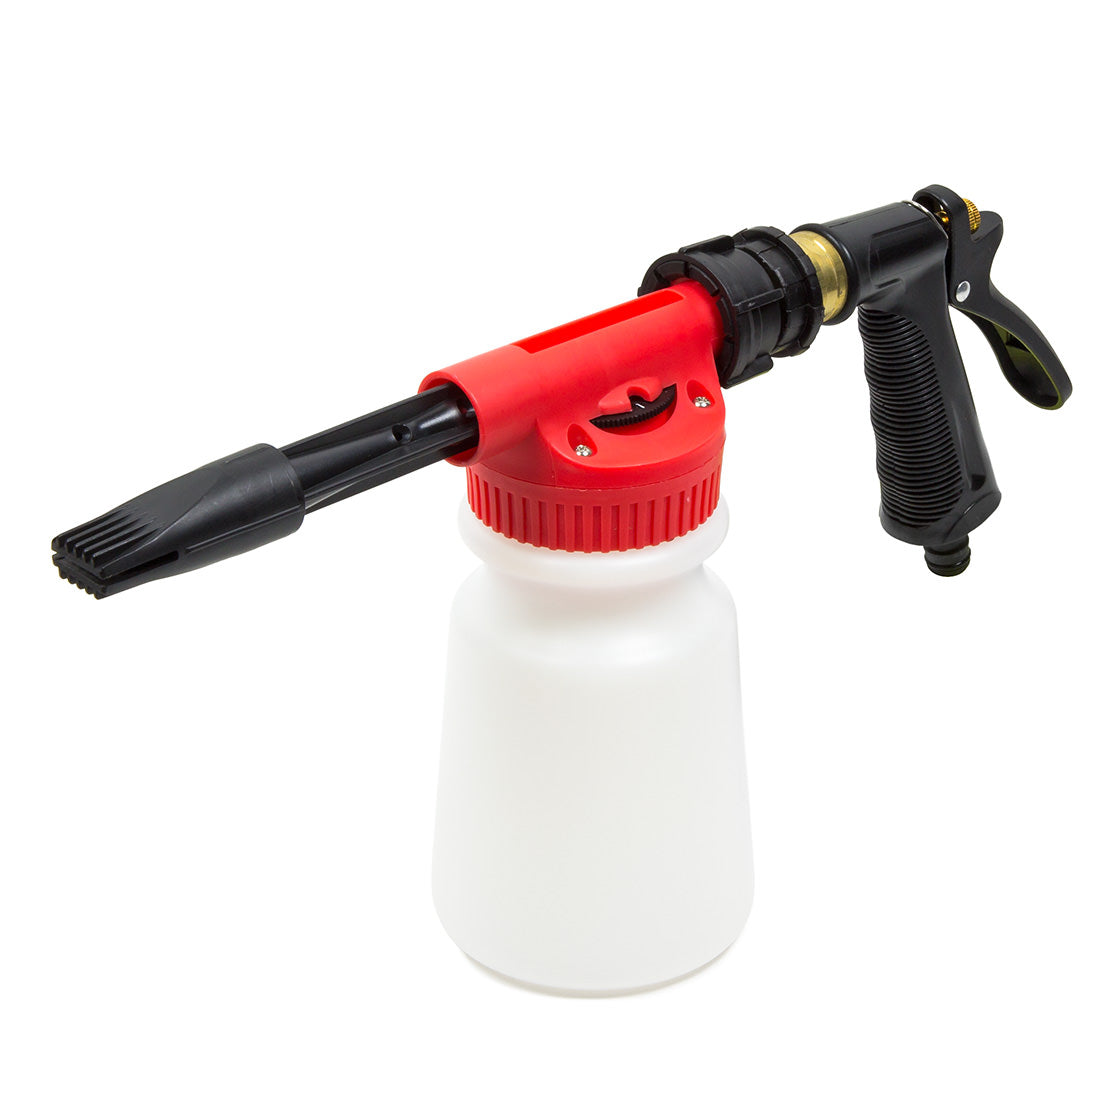 DIY Foam Sprayer at Home  How to make a pump sprayer foam 